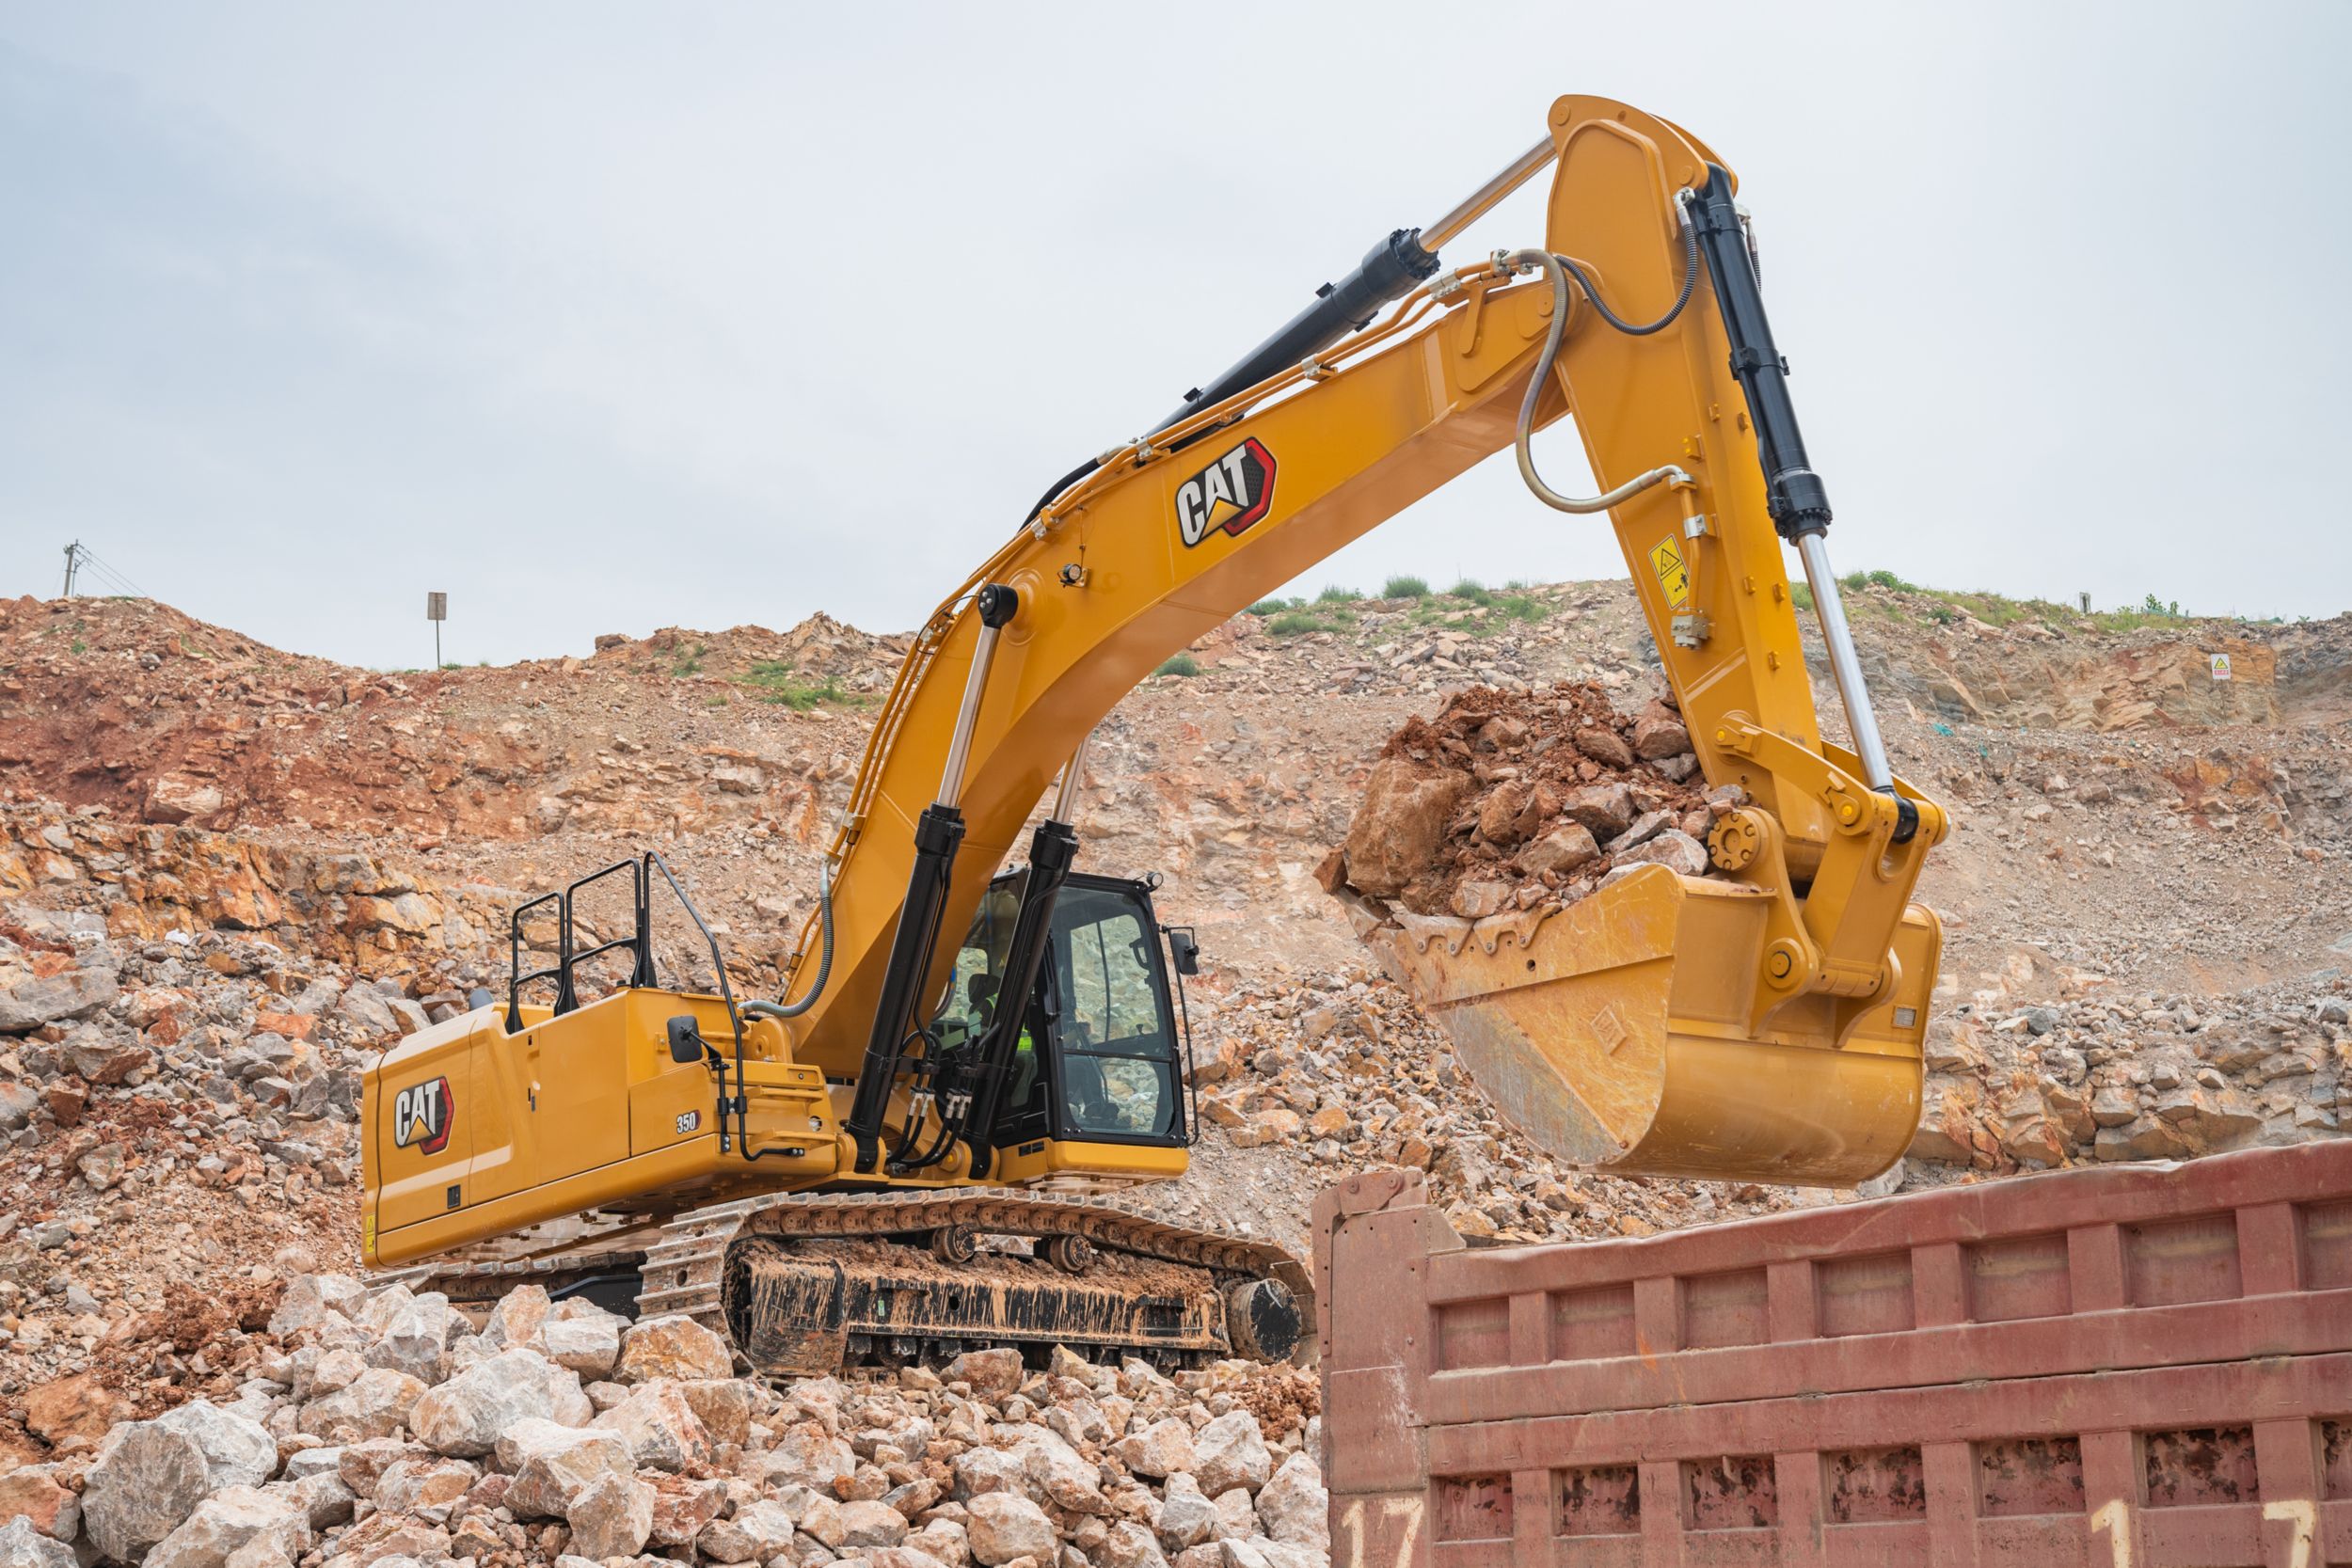 Cat 350 Hydraulic Excavator - HIGH PERFORMANCE, LOW FUEL CONSUMPTION